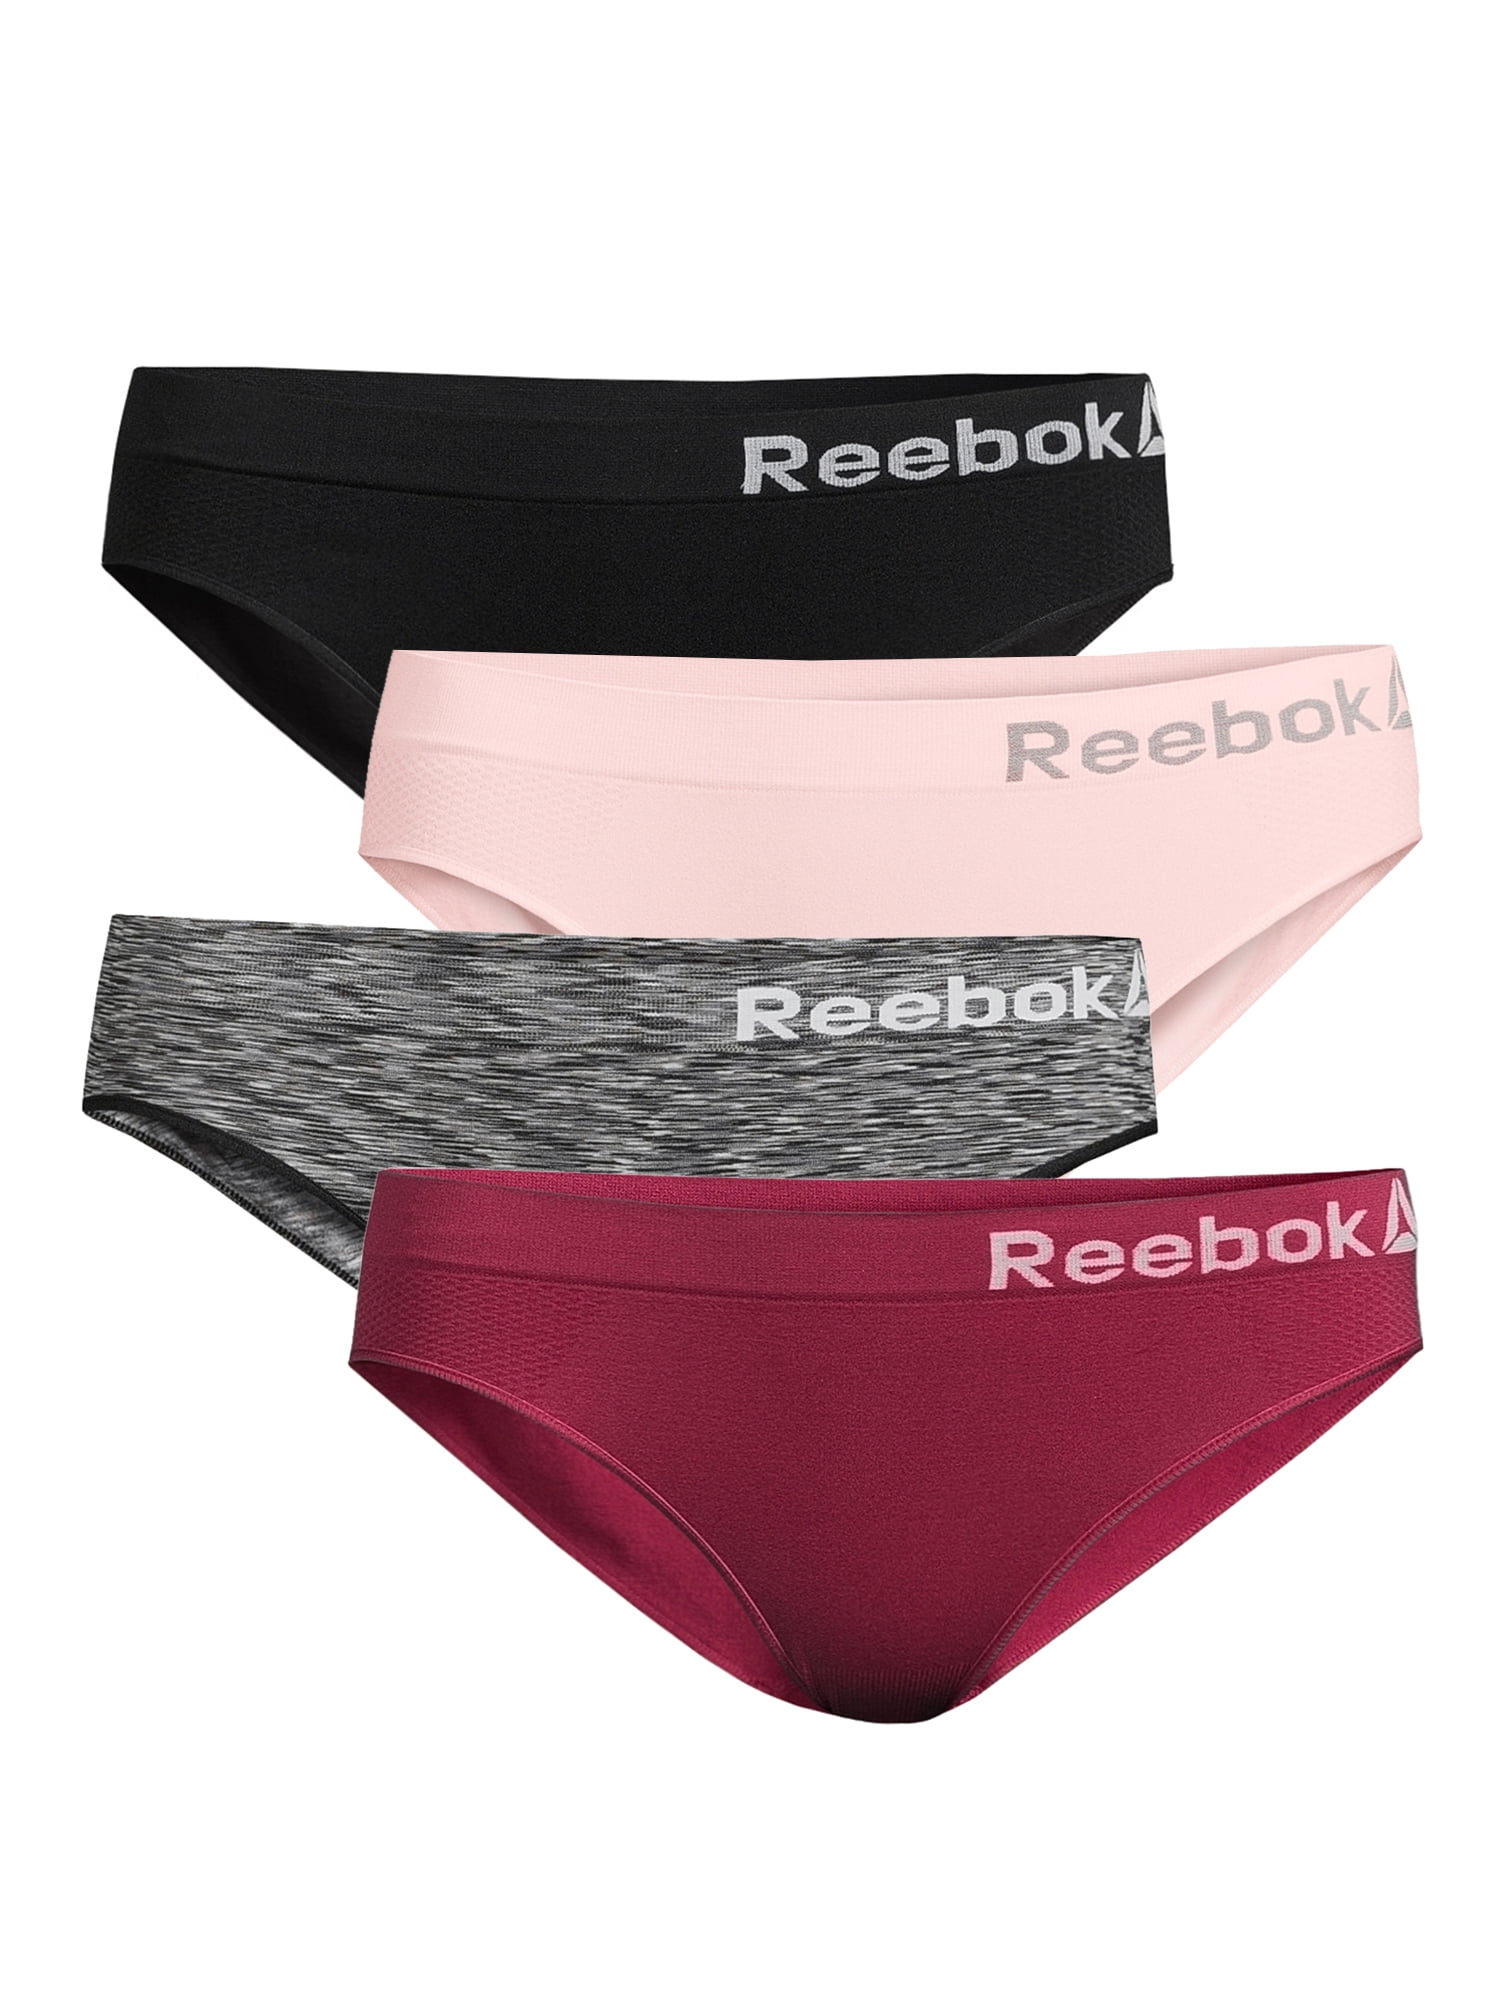 3 Pack Reebok Womens Seamless Hipster Panties Black Space-dye/Red/Black, Small